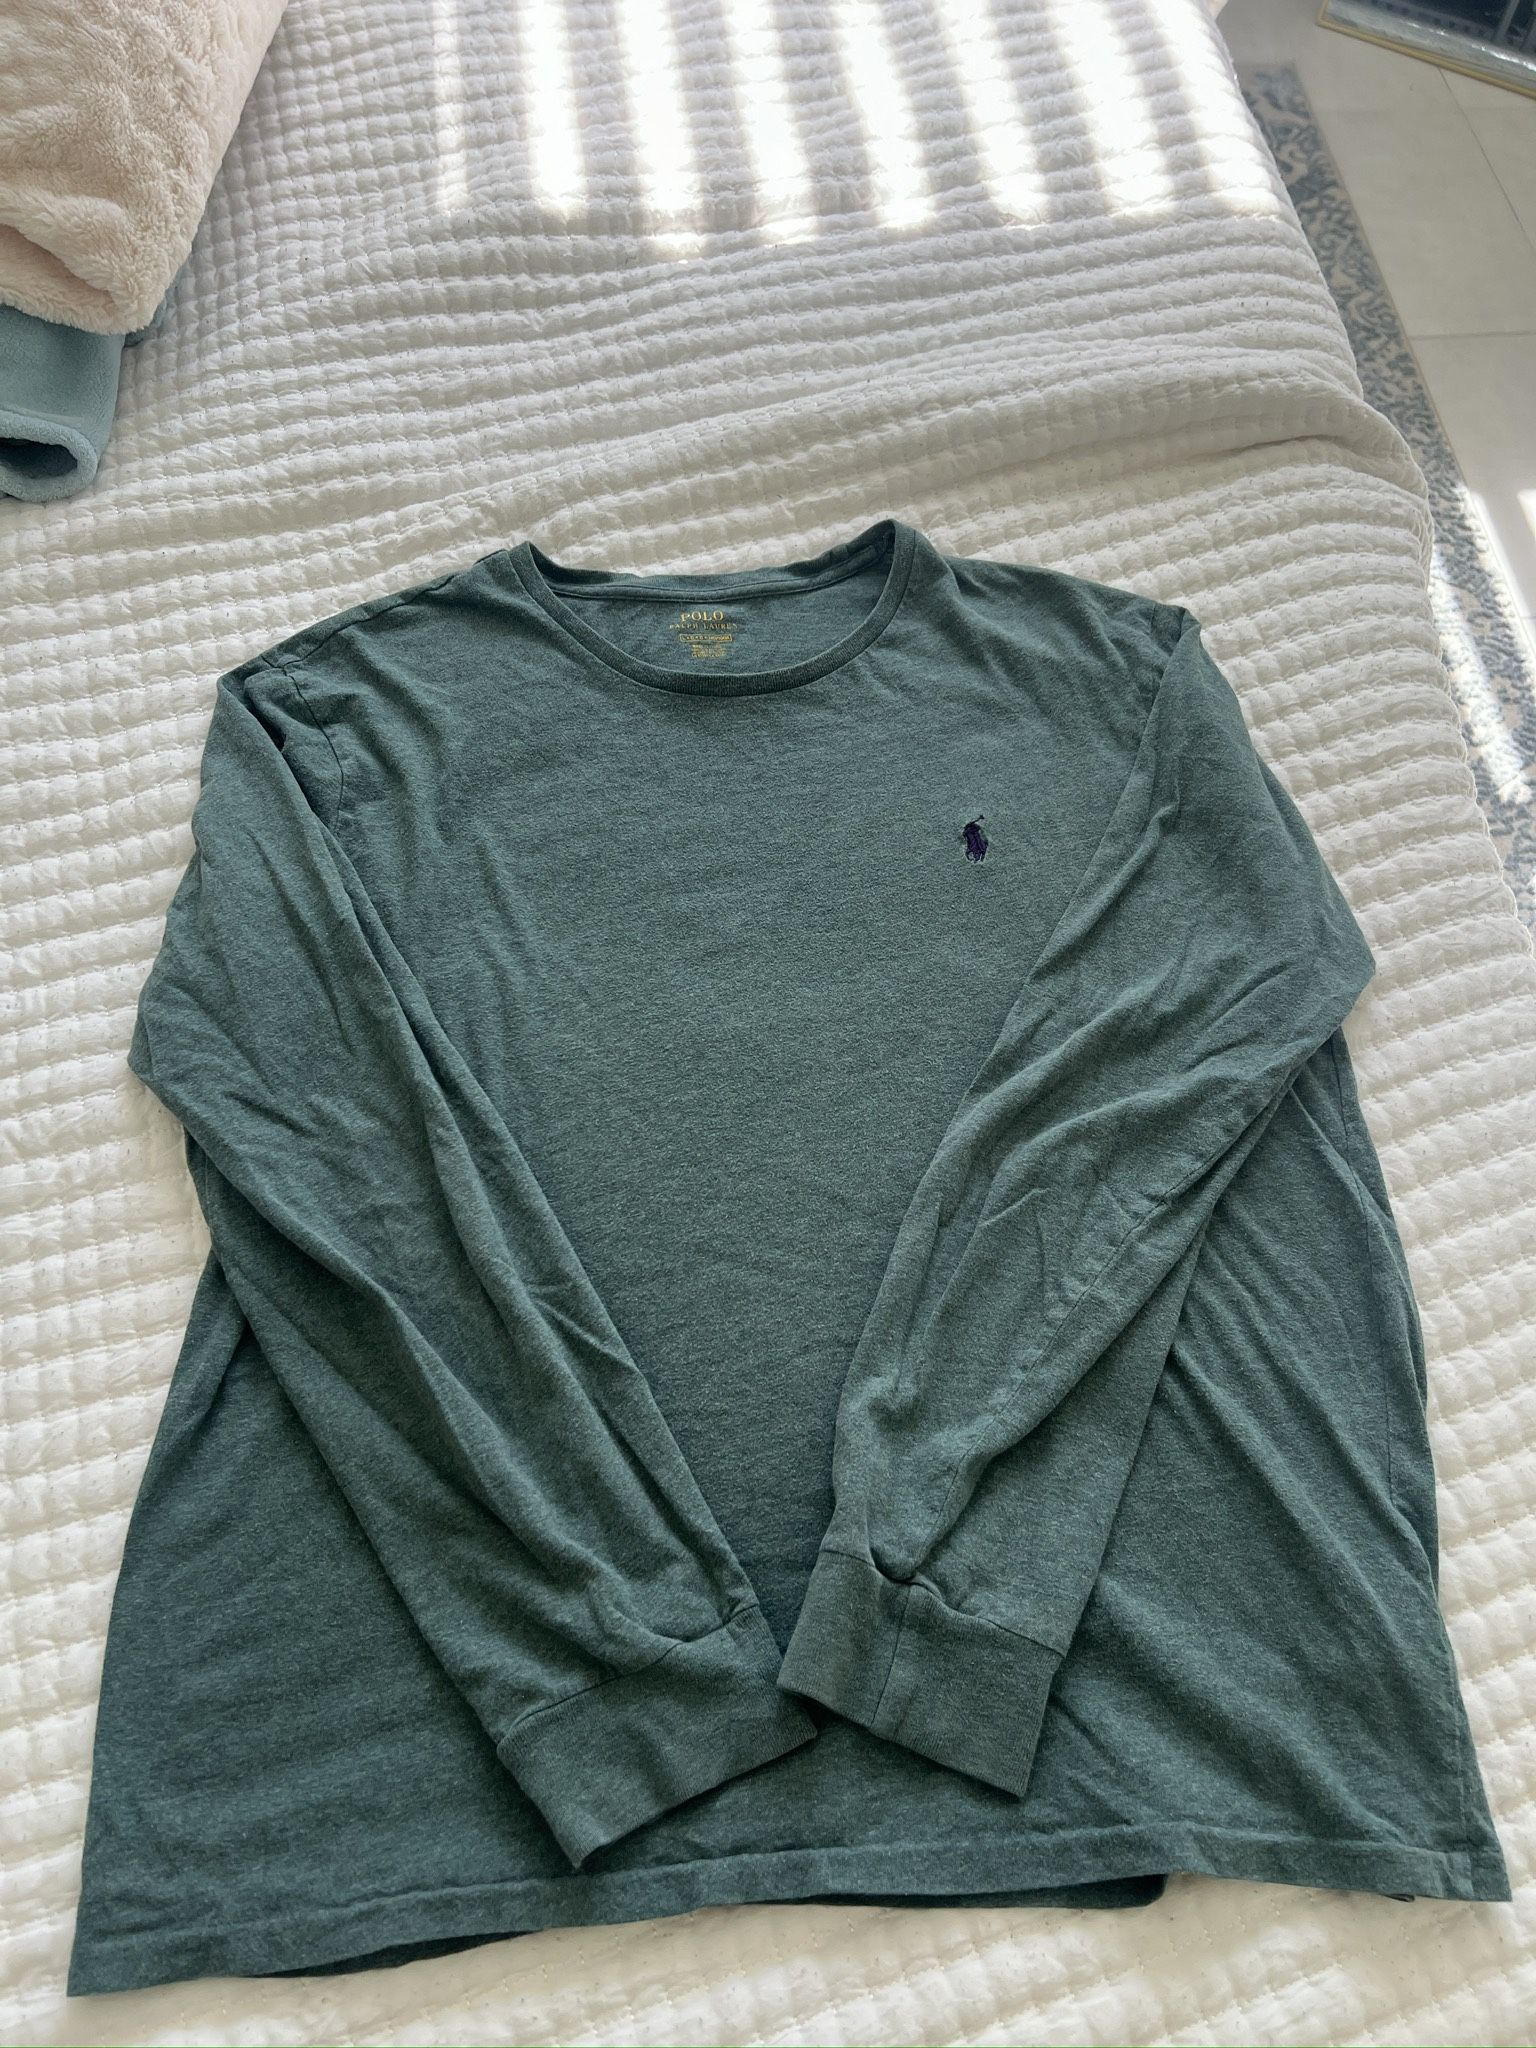 Polo Ralph Lauren Forest Green long sleeve shirt size large